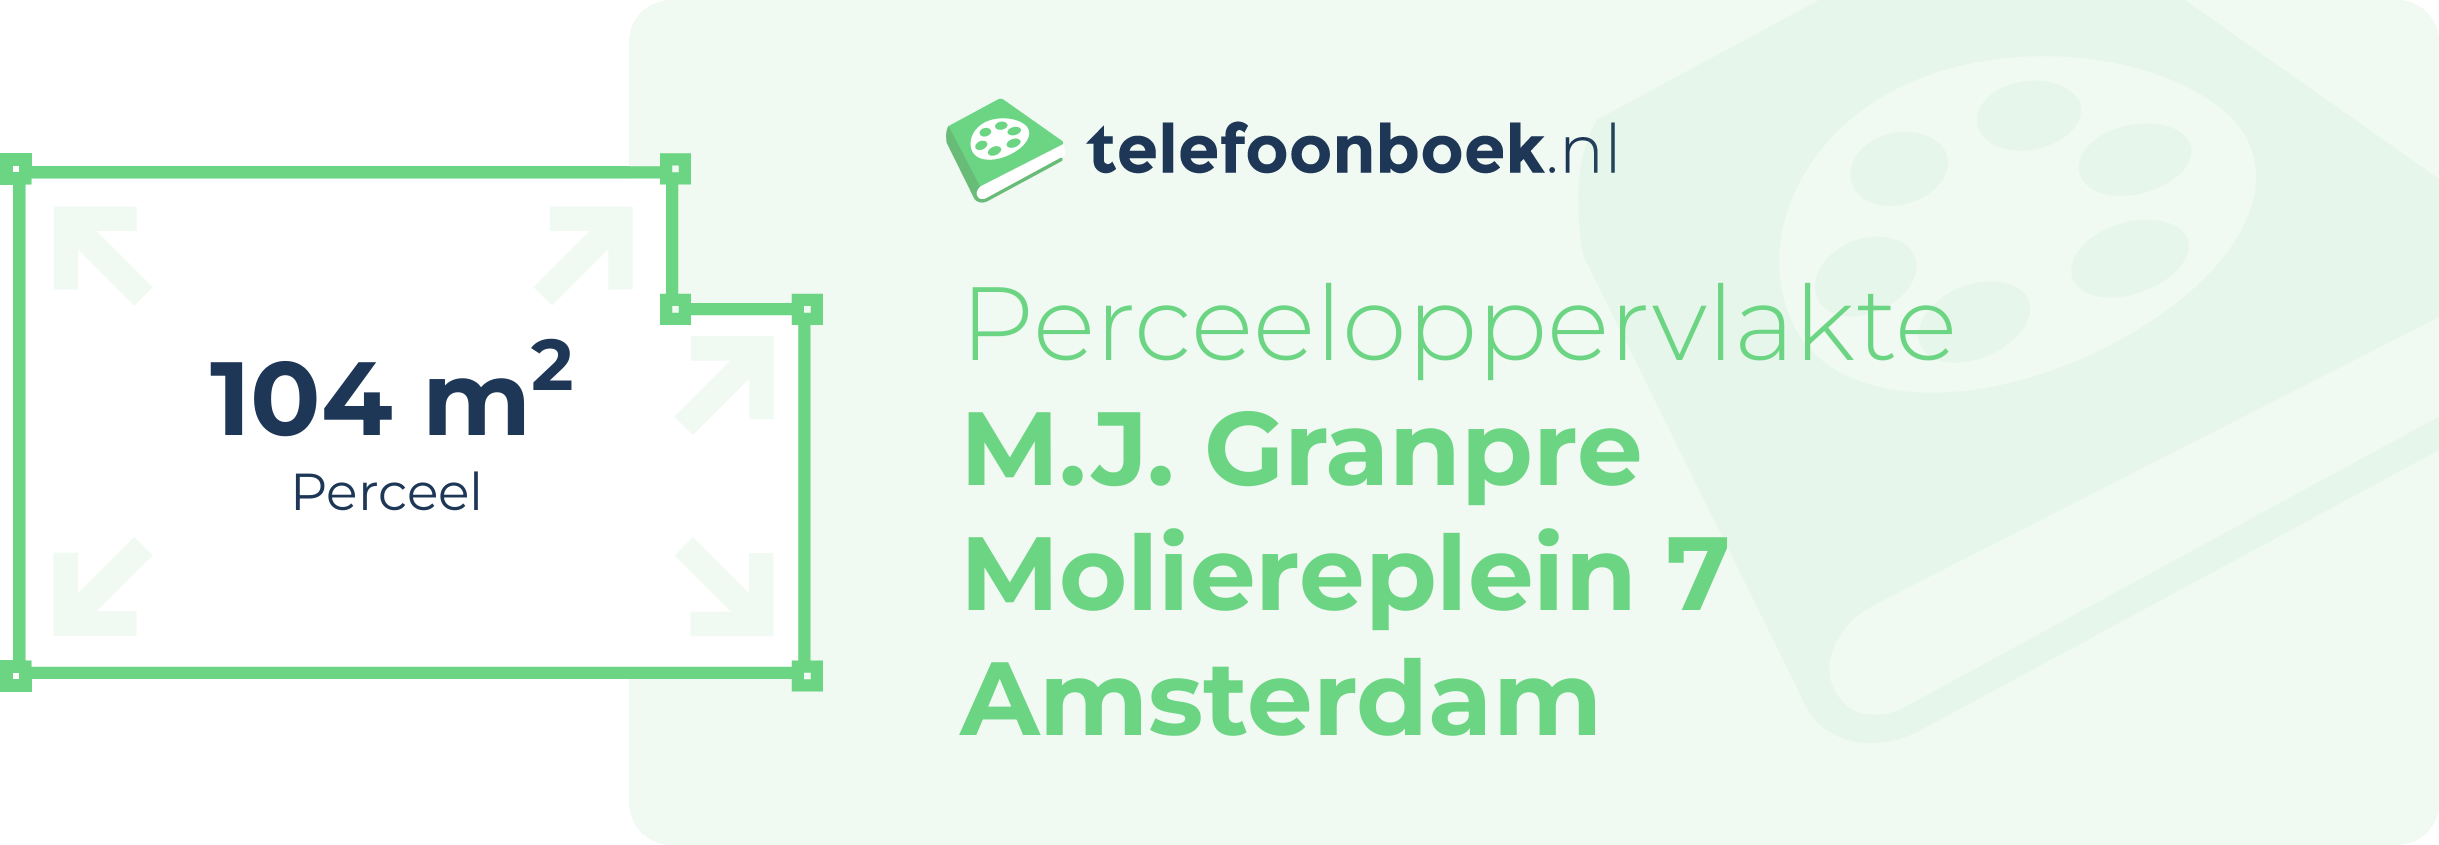 Perceeloppervlakte M.J. Granpre Moliereplein 7 Amsterdam